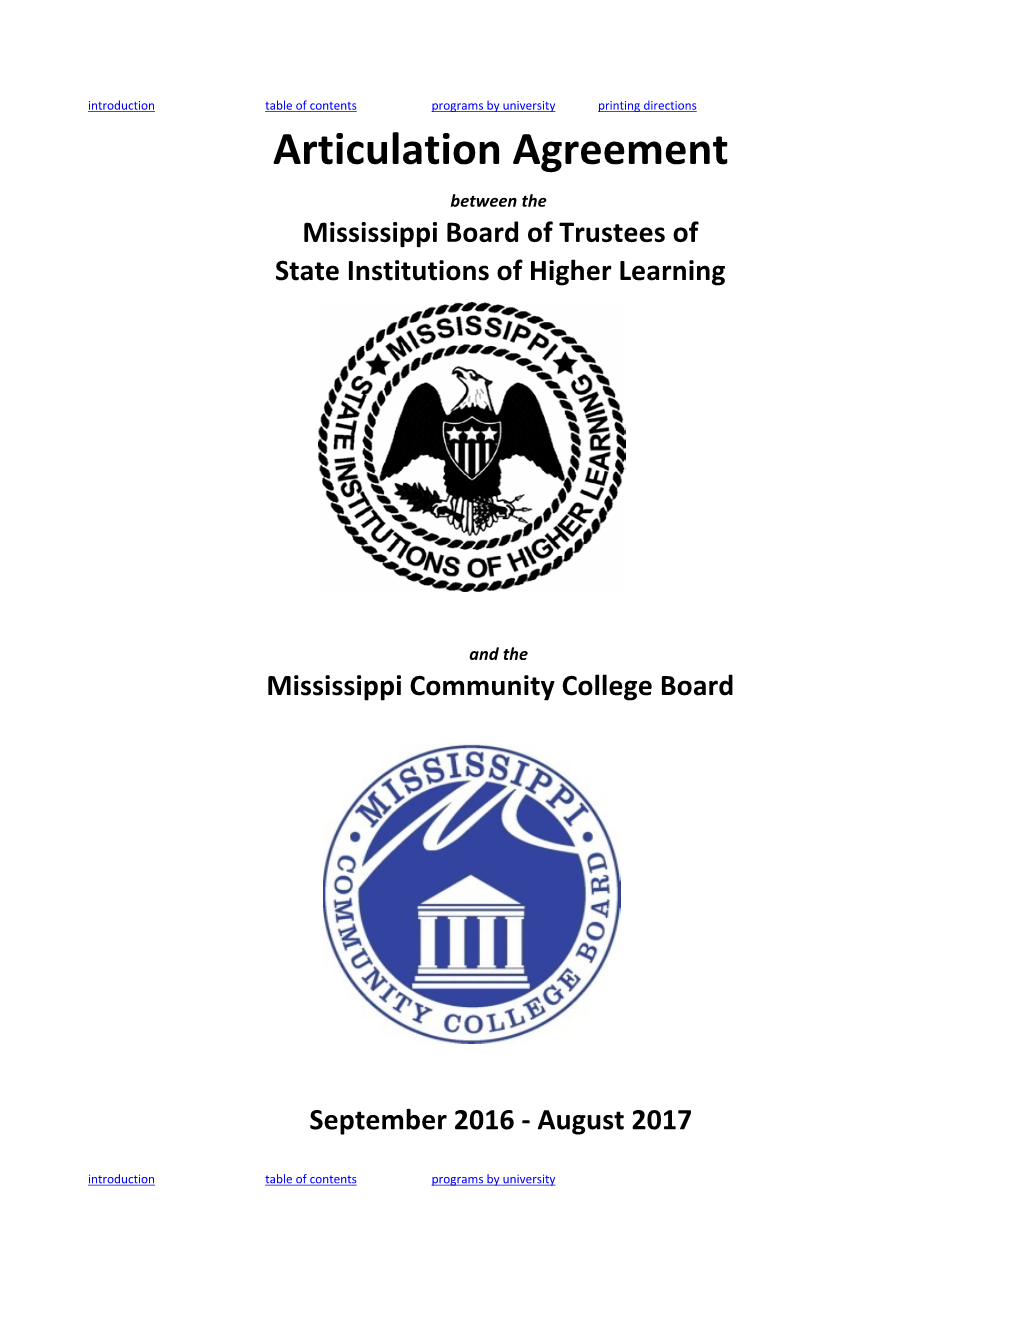 MCCB/IHL Articulation Agreement